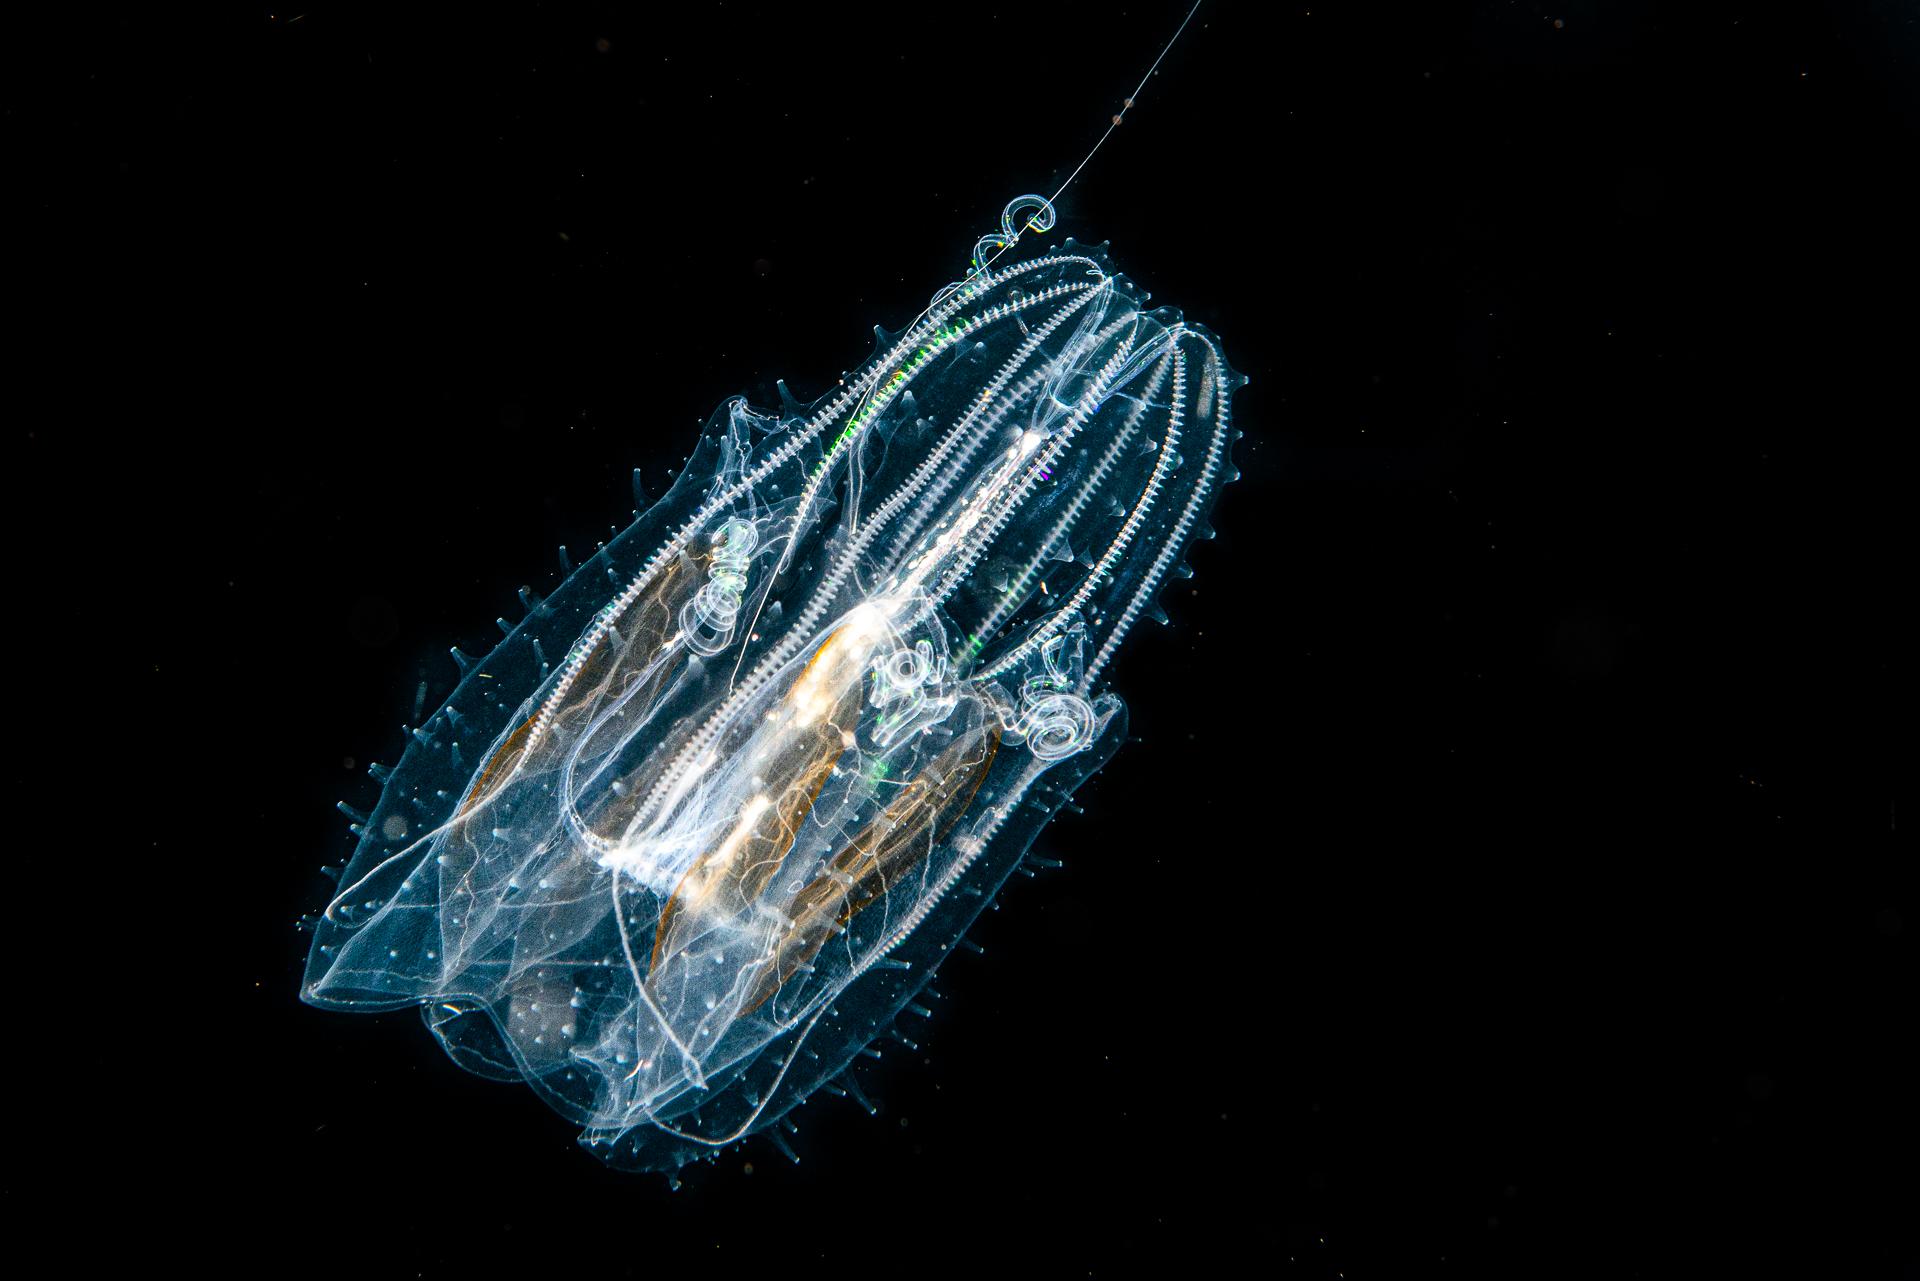 London Photography Awards Winner - comb jellyfish